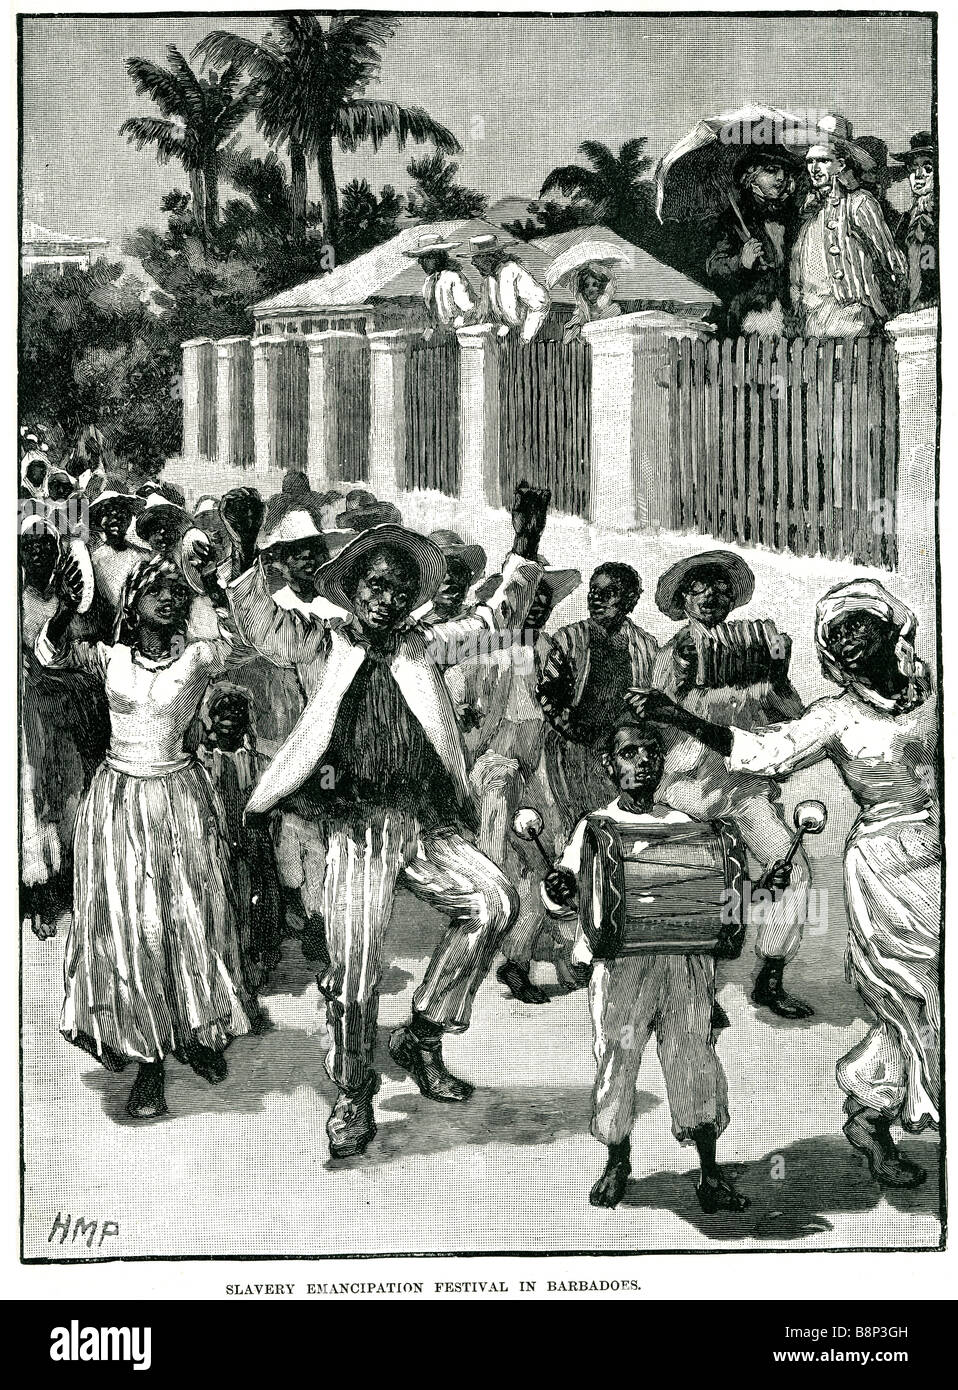 Festival de l'émancipation de l'esclavage en 1834 esclaves barbadoes Banque D'Images